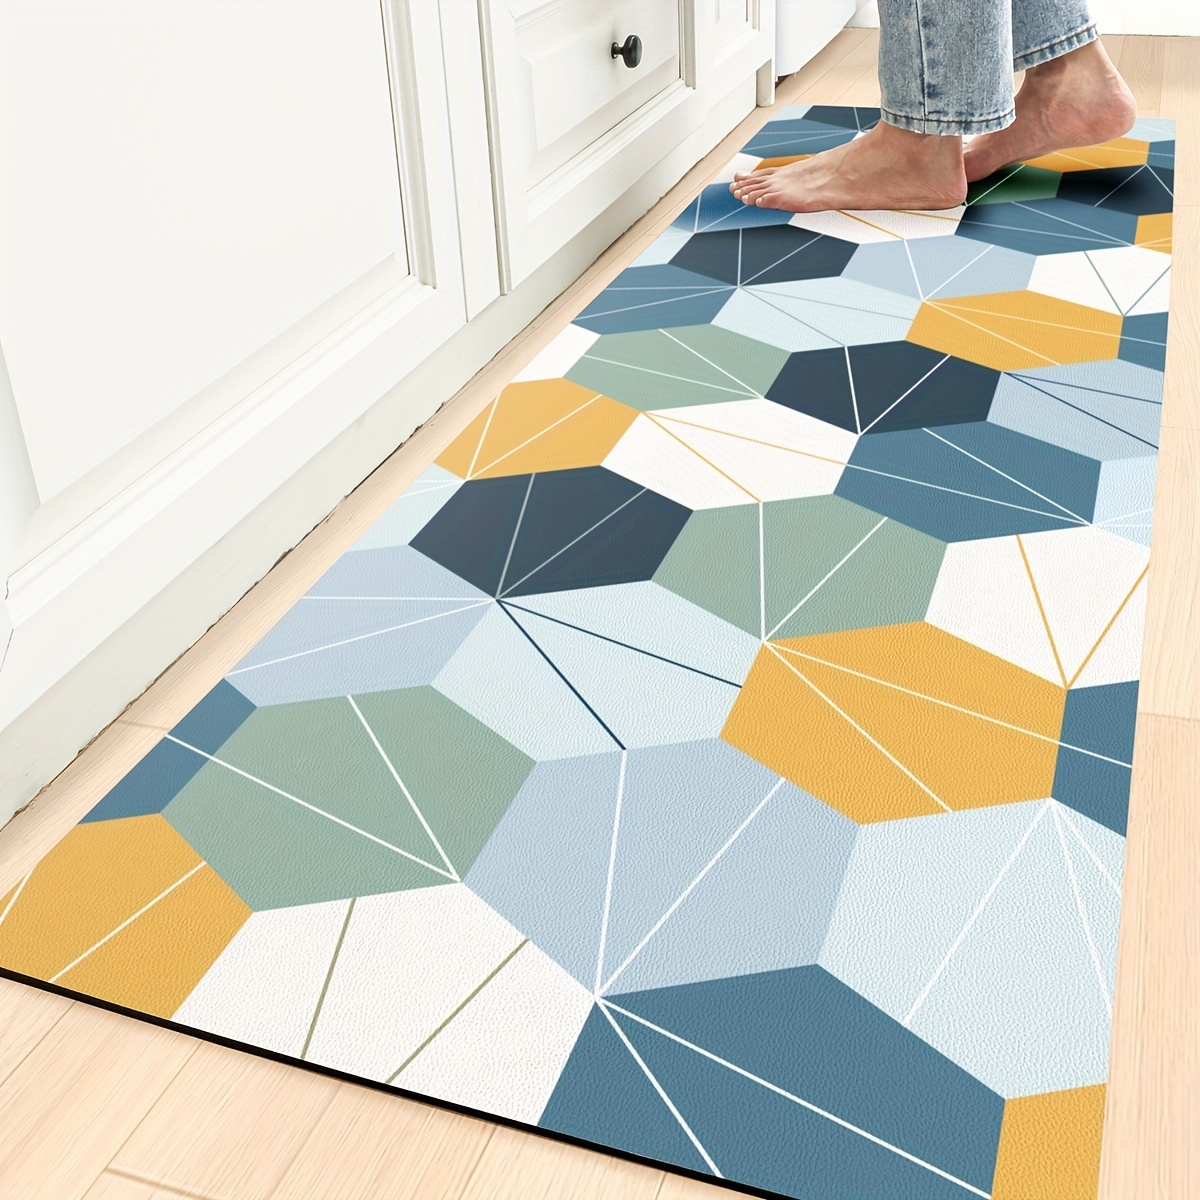 DEXI Kitchen Mat Cushioned Anti Fatigue Comfort Floor Runner Rug